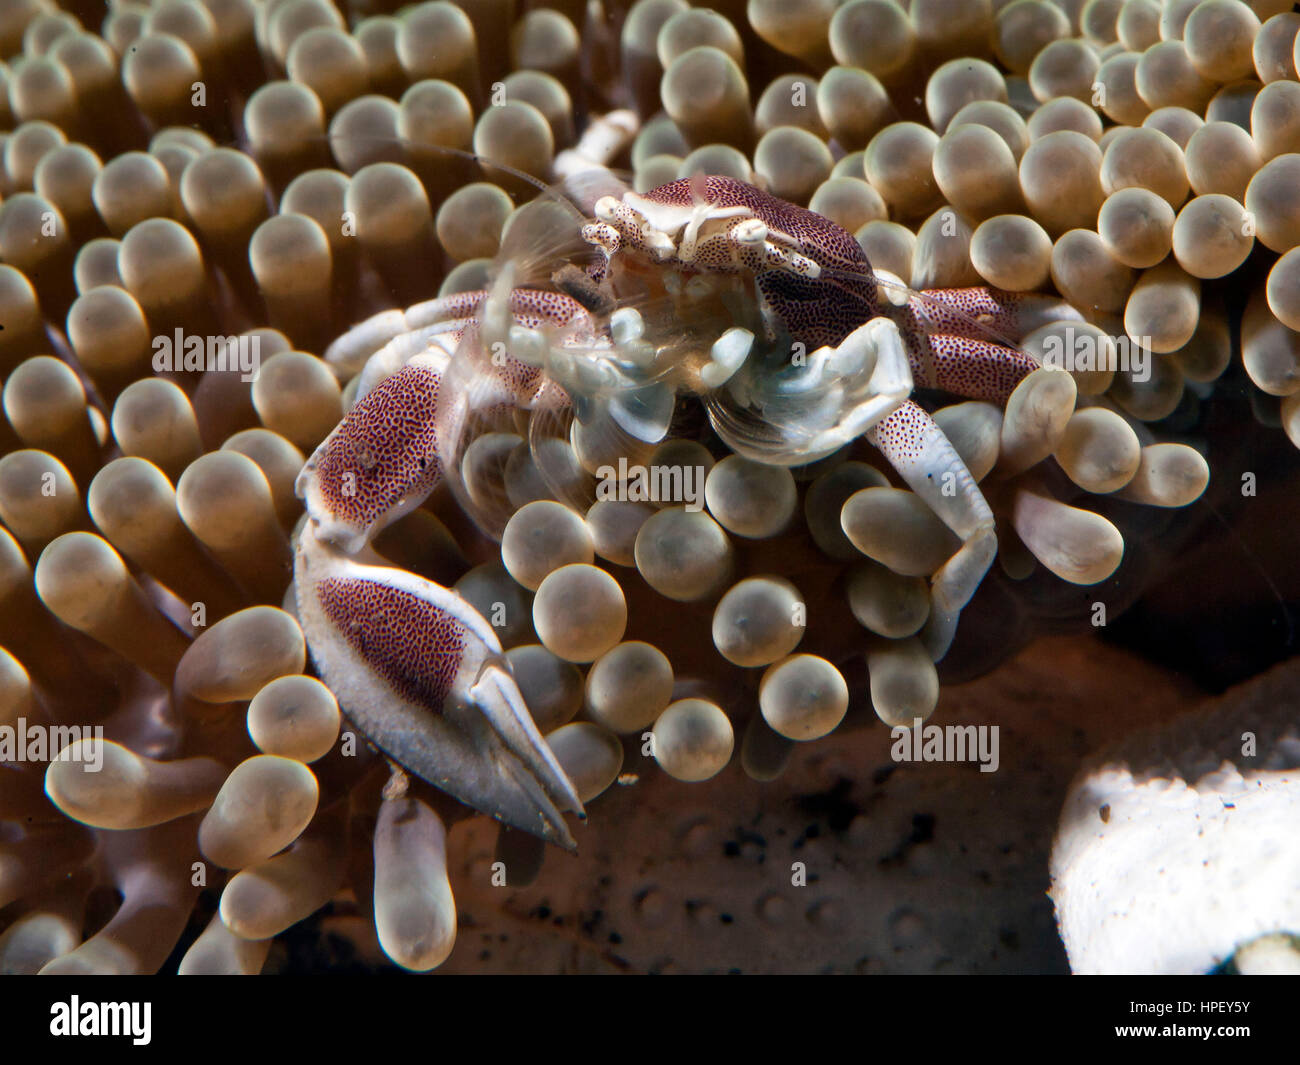 Porcelain crab in Annemone, Neopetrolisthes maculatus, Bali, Indonesia, Asia Stock Photo